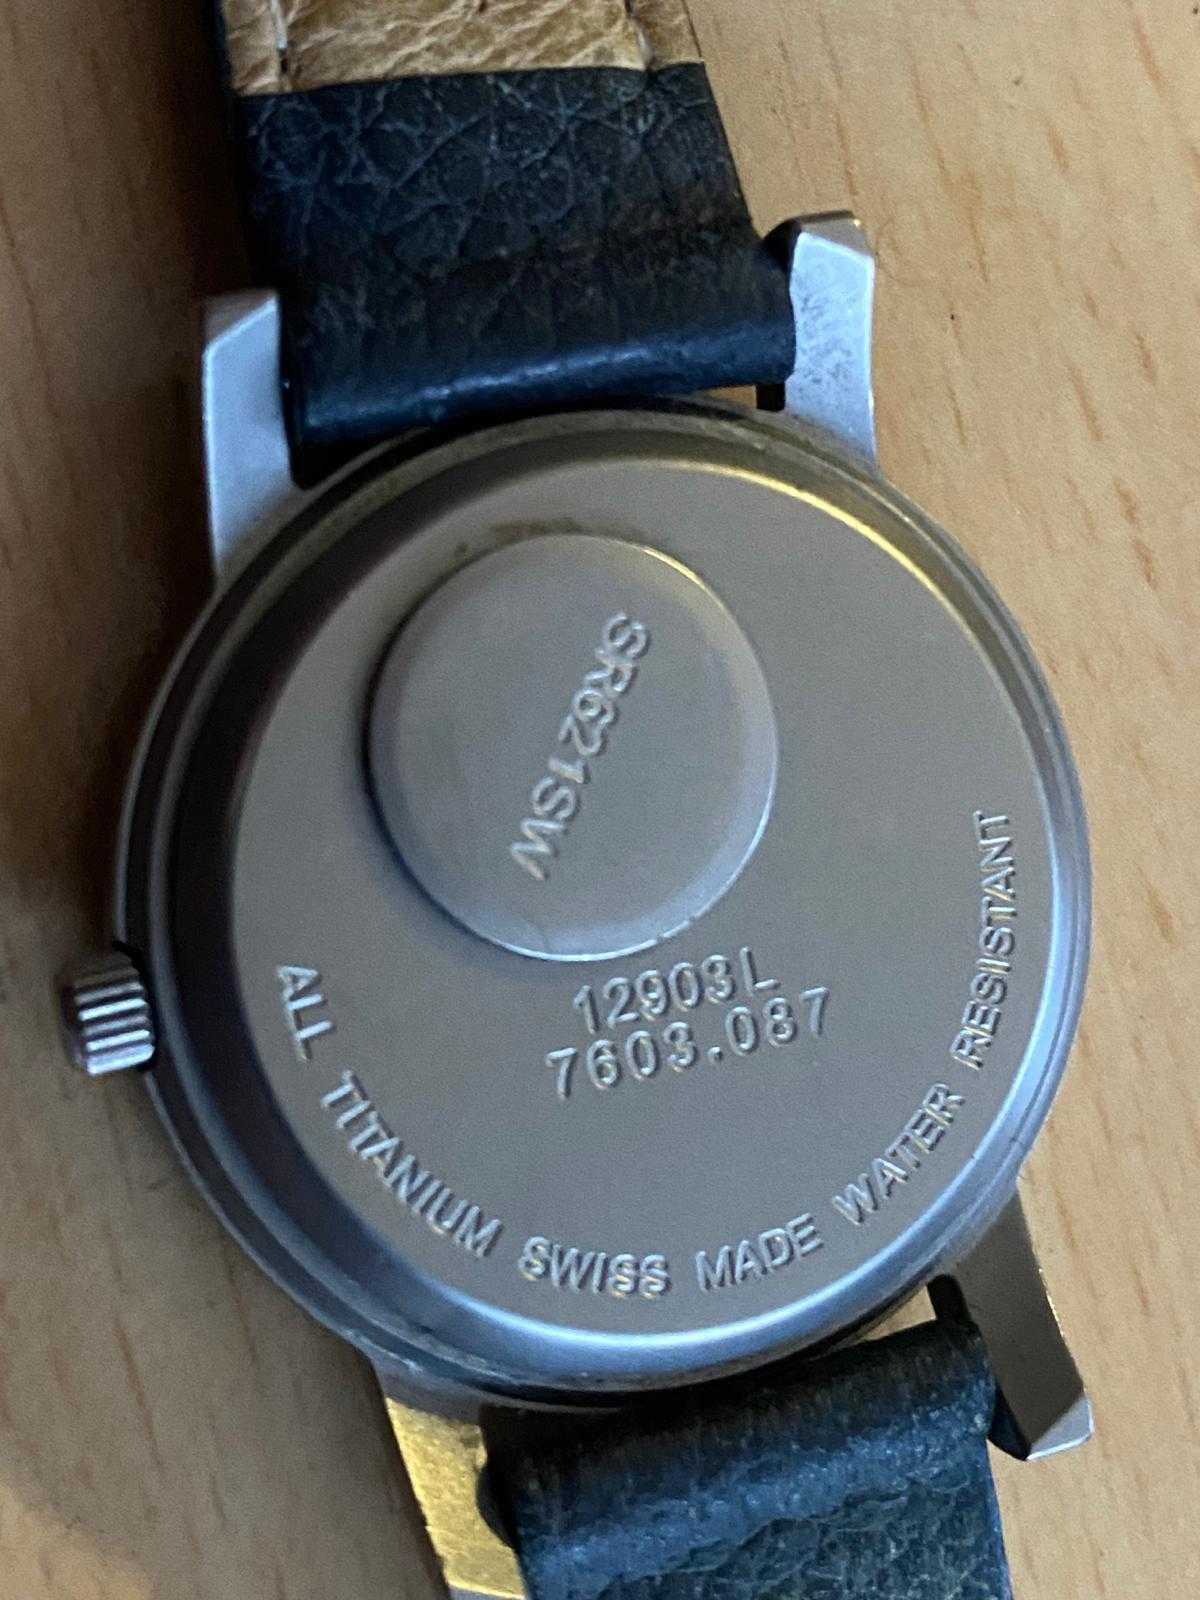 Ceas Mondaine M Watch quartz titan unisex 12903L Swiss